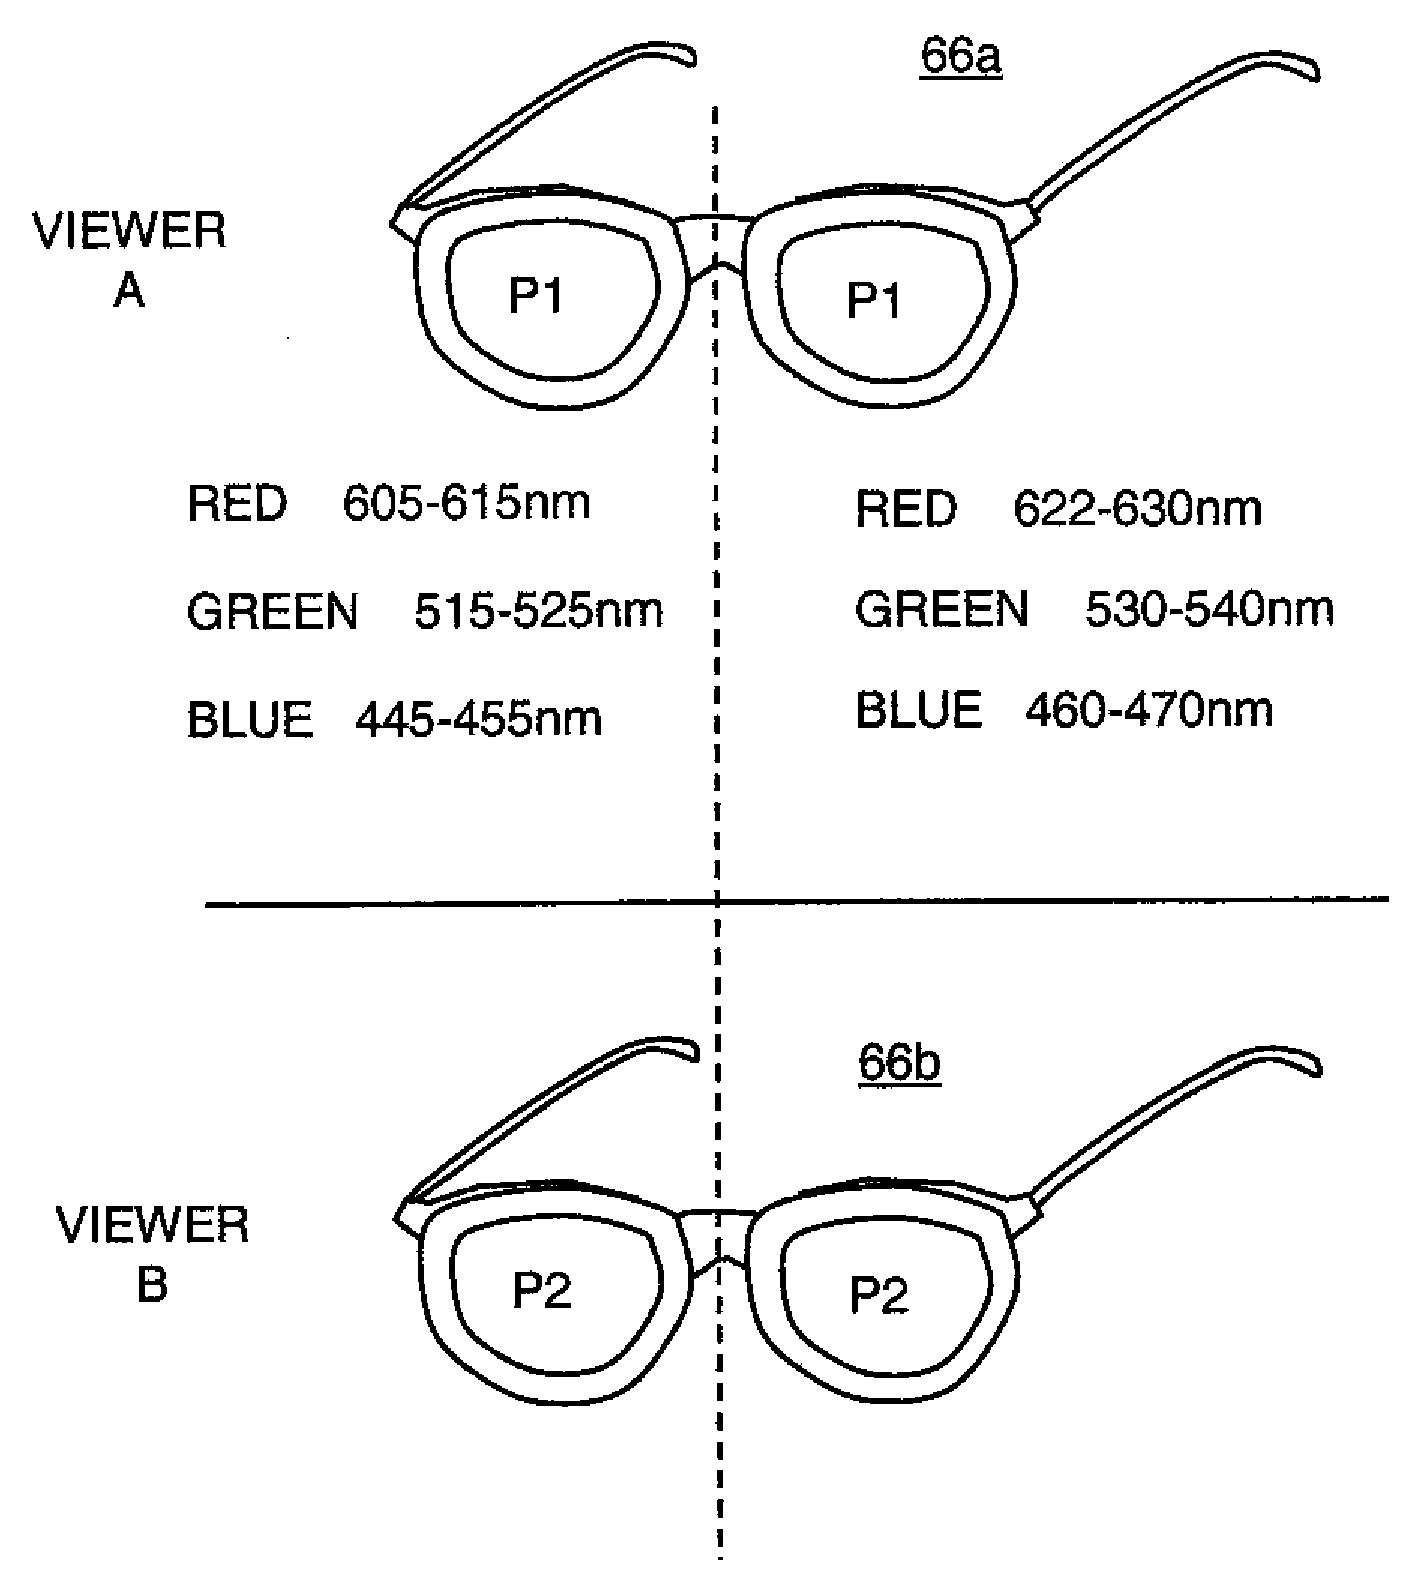 Dual-view stereoscopic display using linear modulator arrays